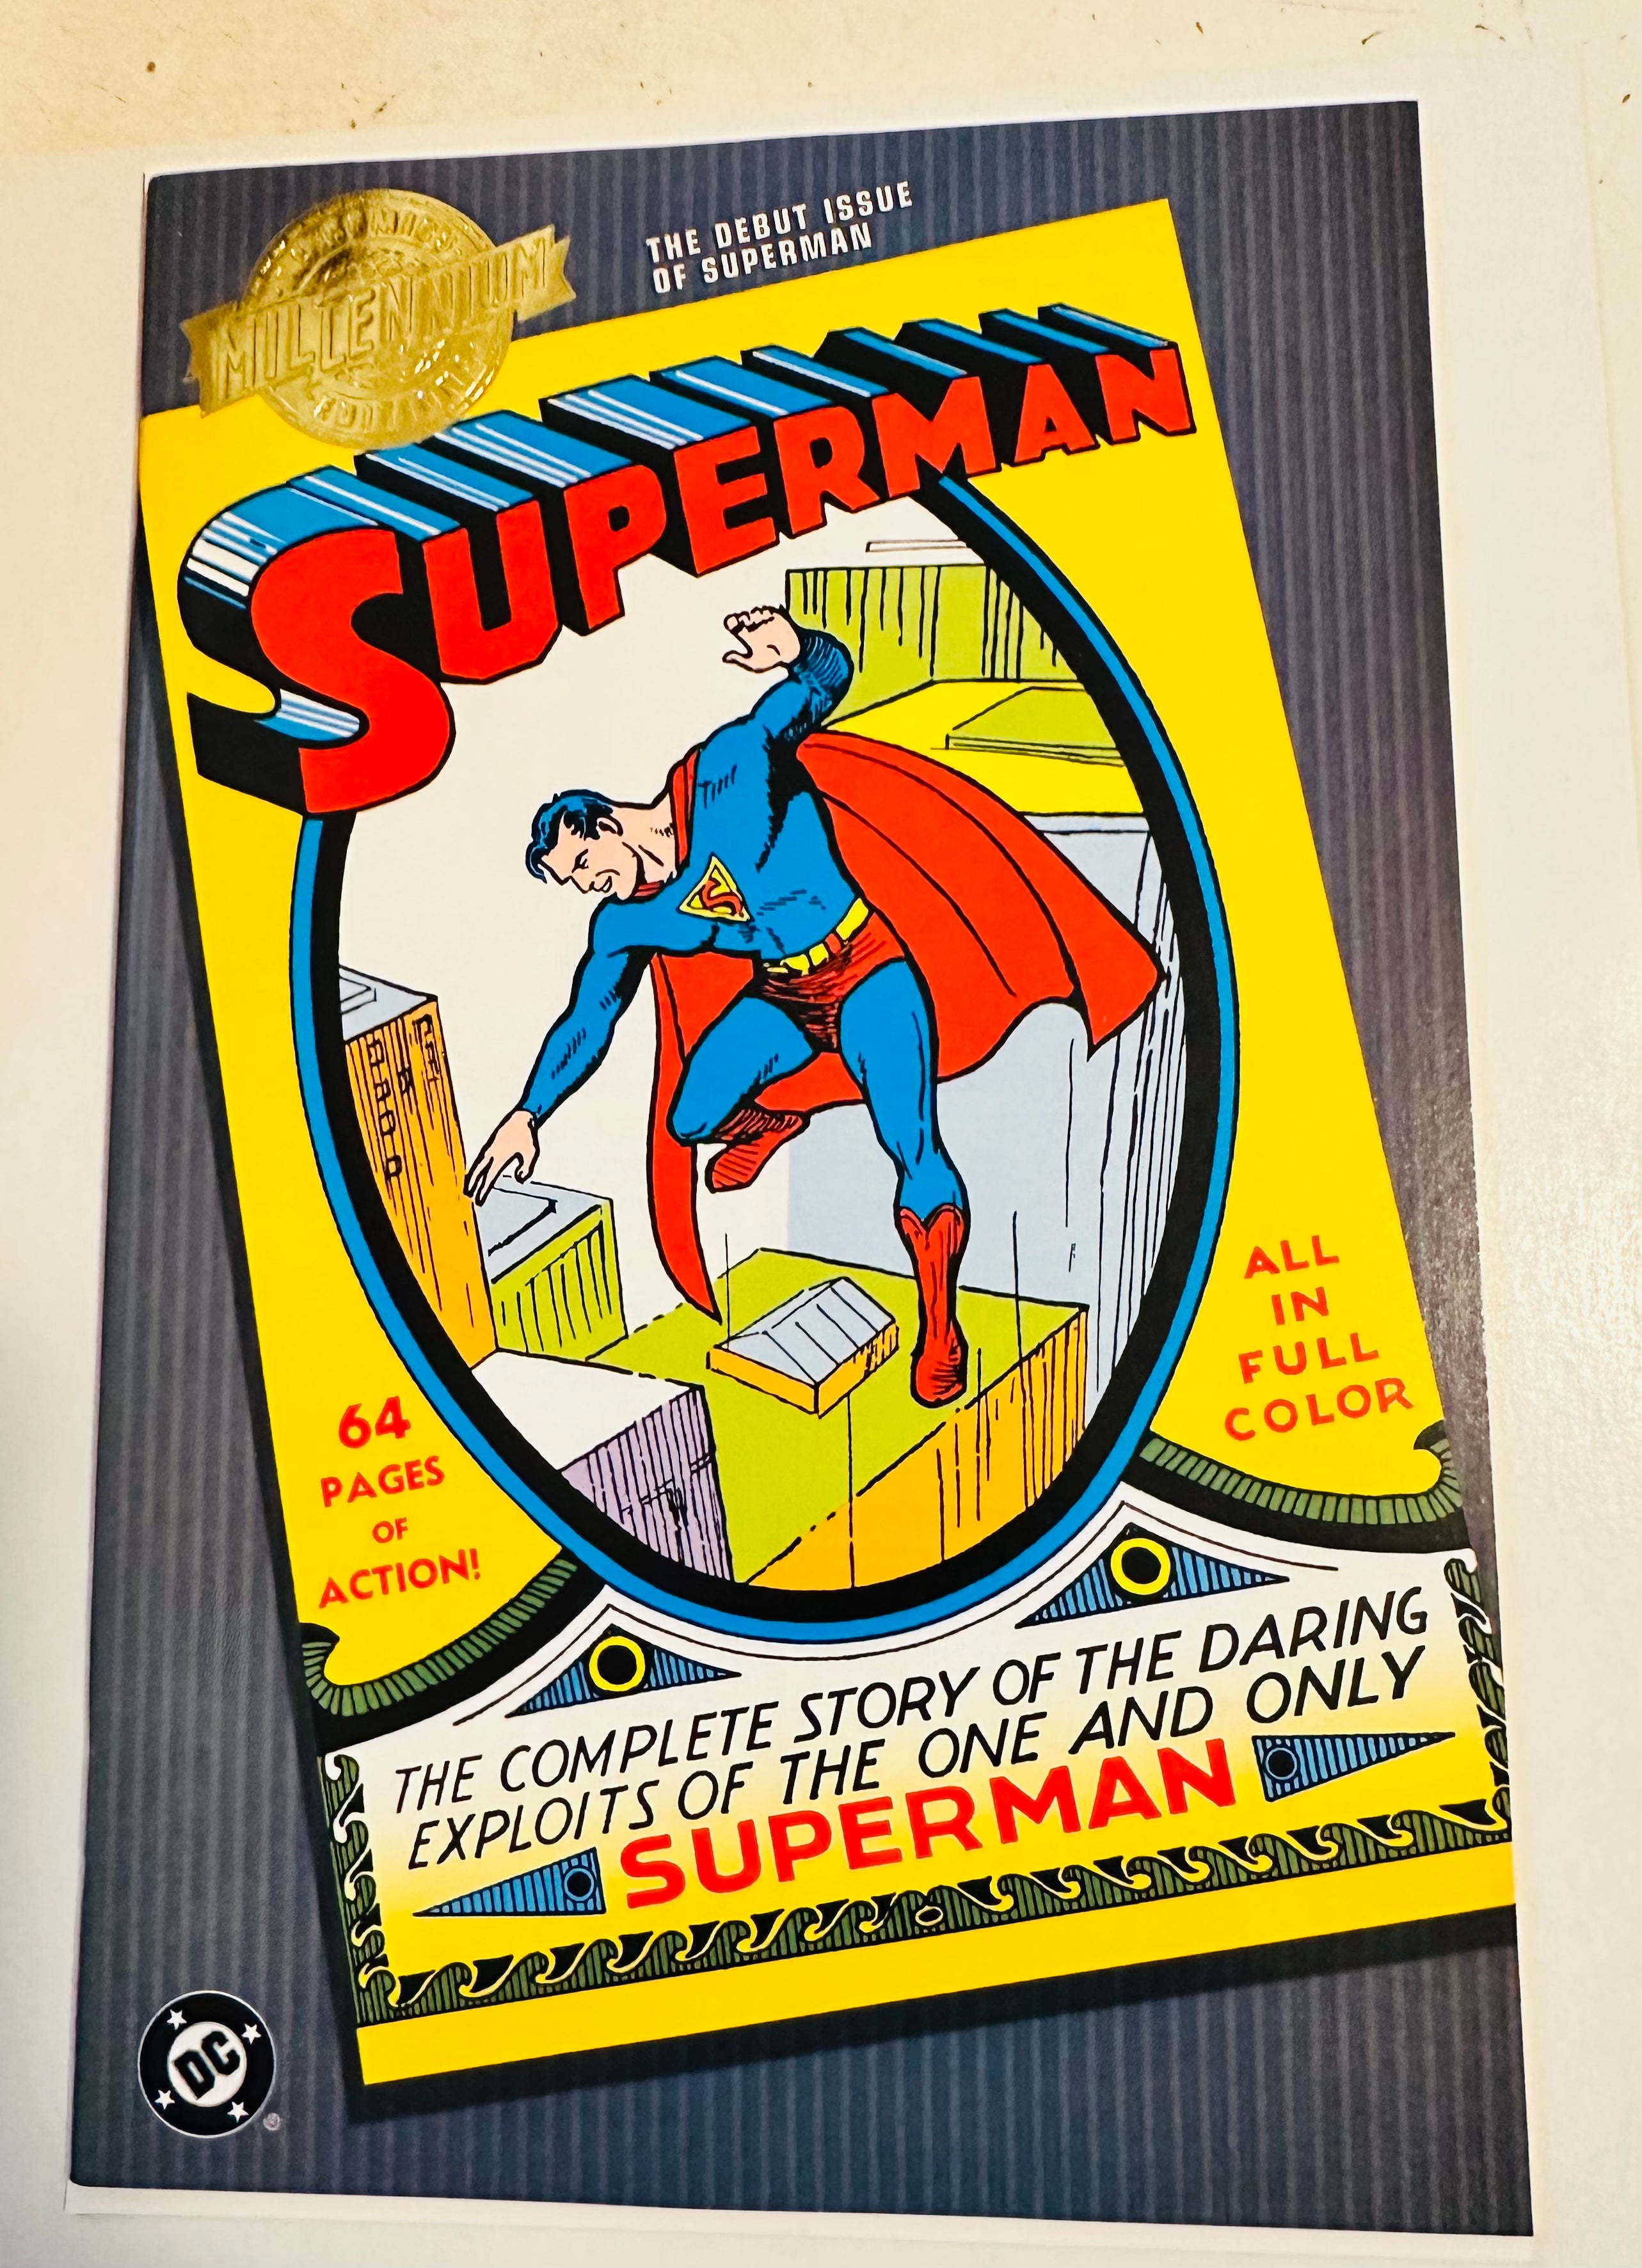 Superman millennium number one issue comic book 2000